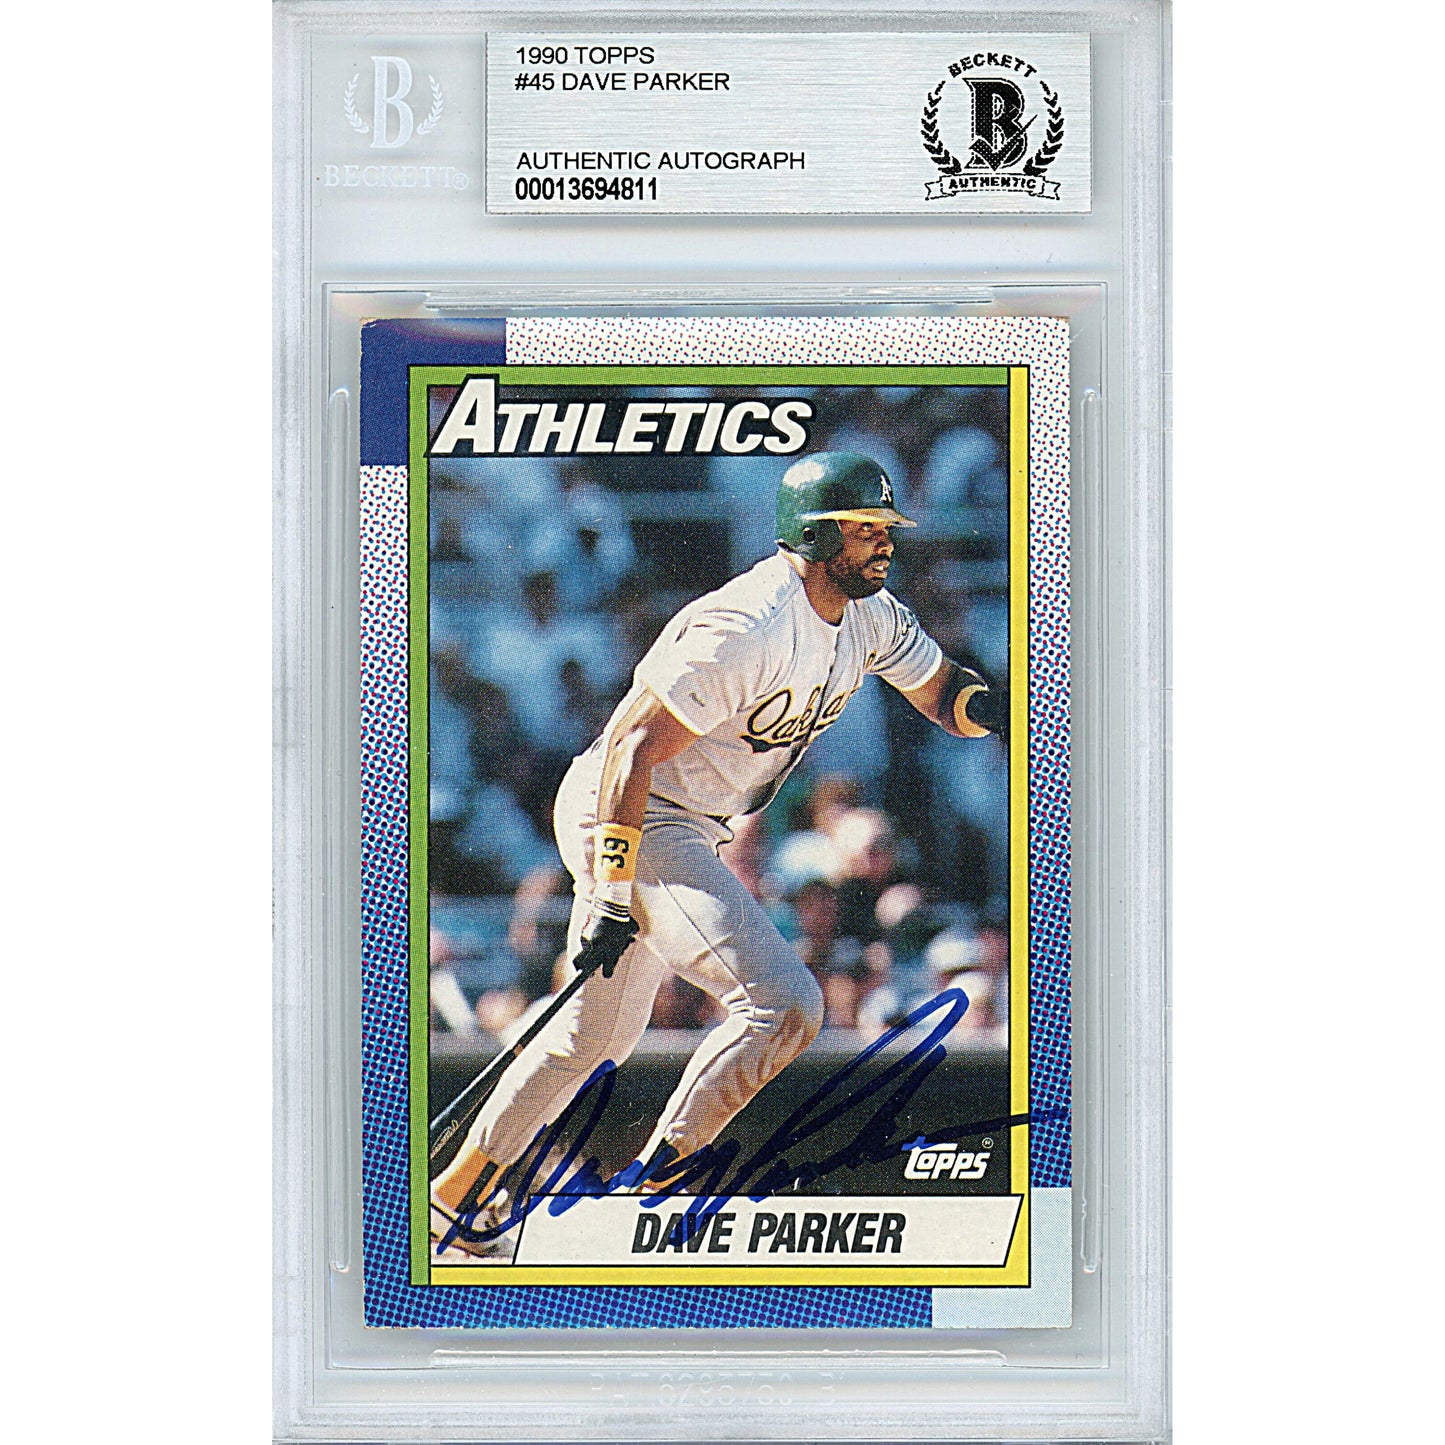 Baseballs- Autographed- Dave Parker Signed Oakland Athletics A's 1990 Topps Baseball Card Beckett BAS Slabbed 00013694811 - 101